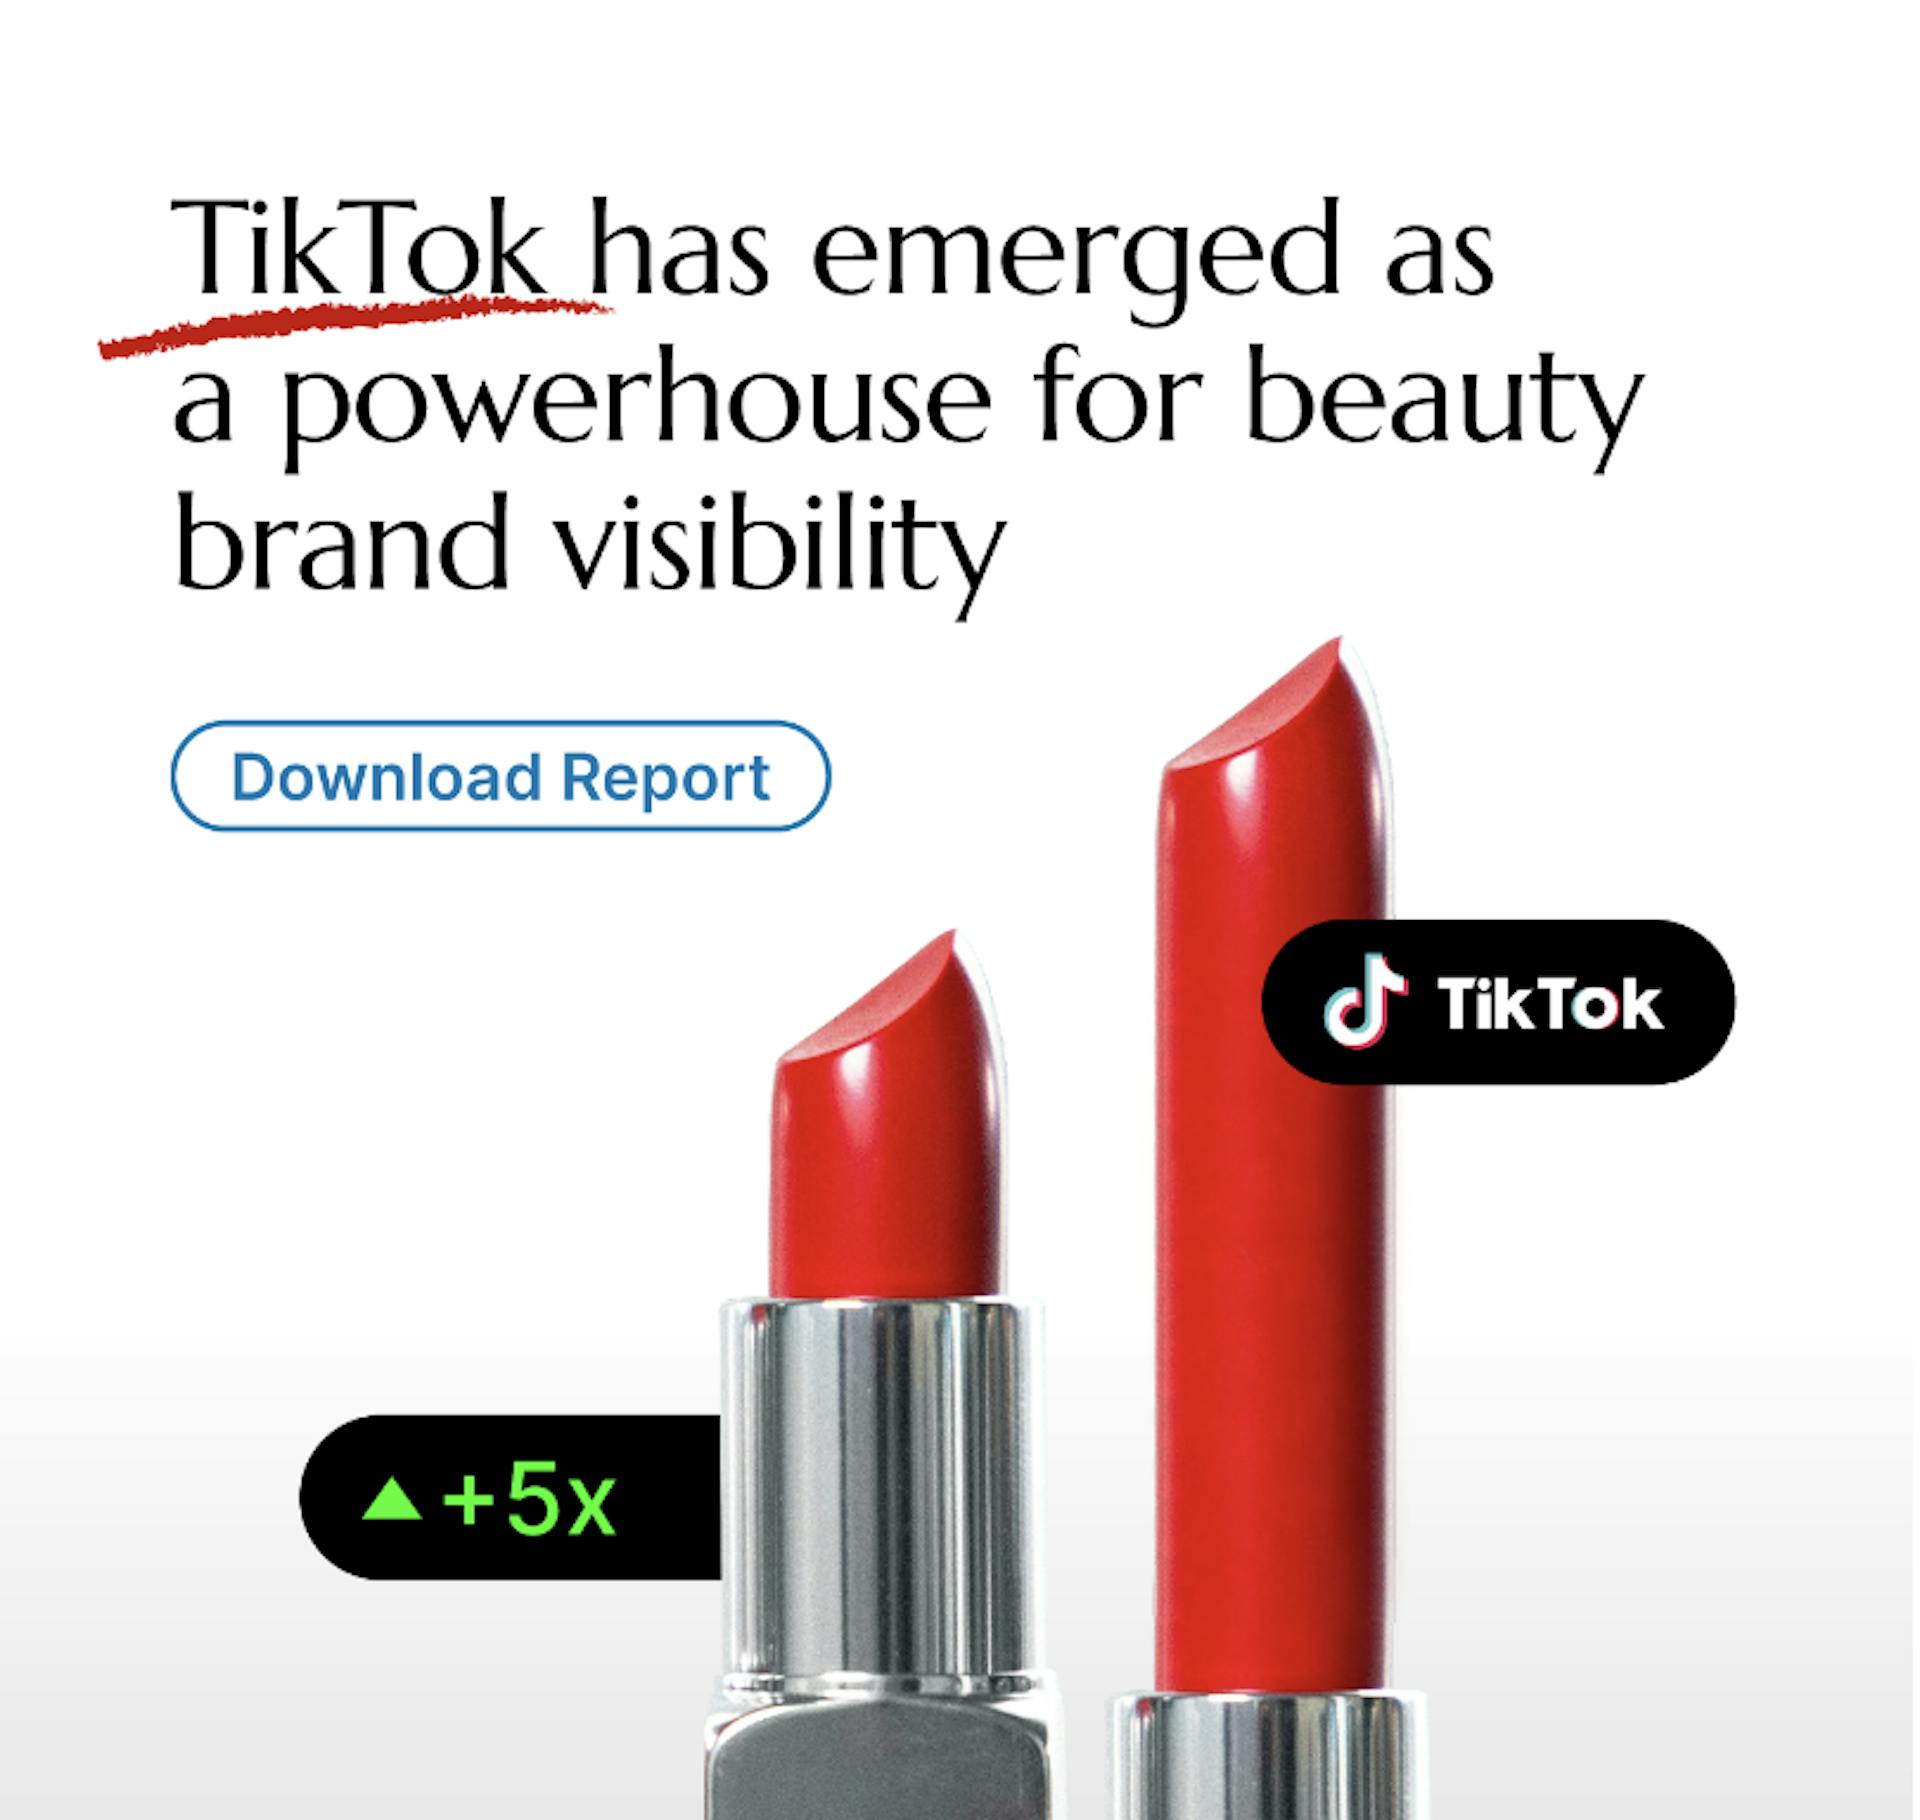 TikTok has emerged as a powerhouse for beauty brand visibility.